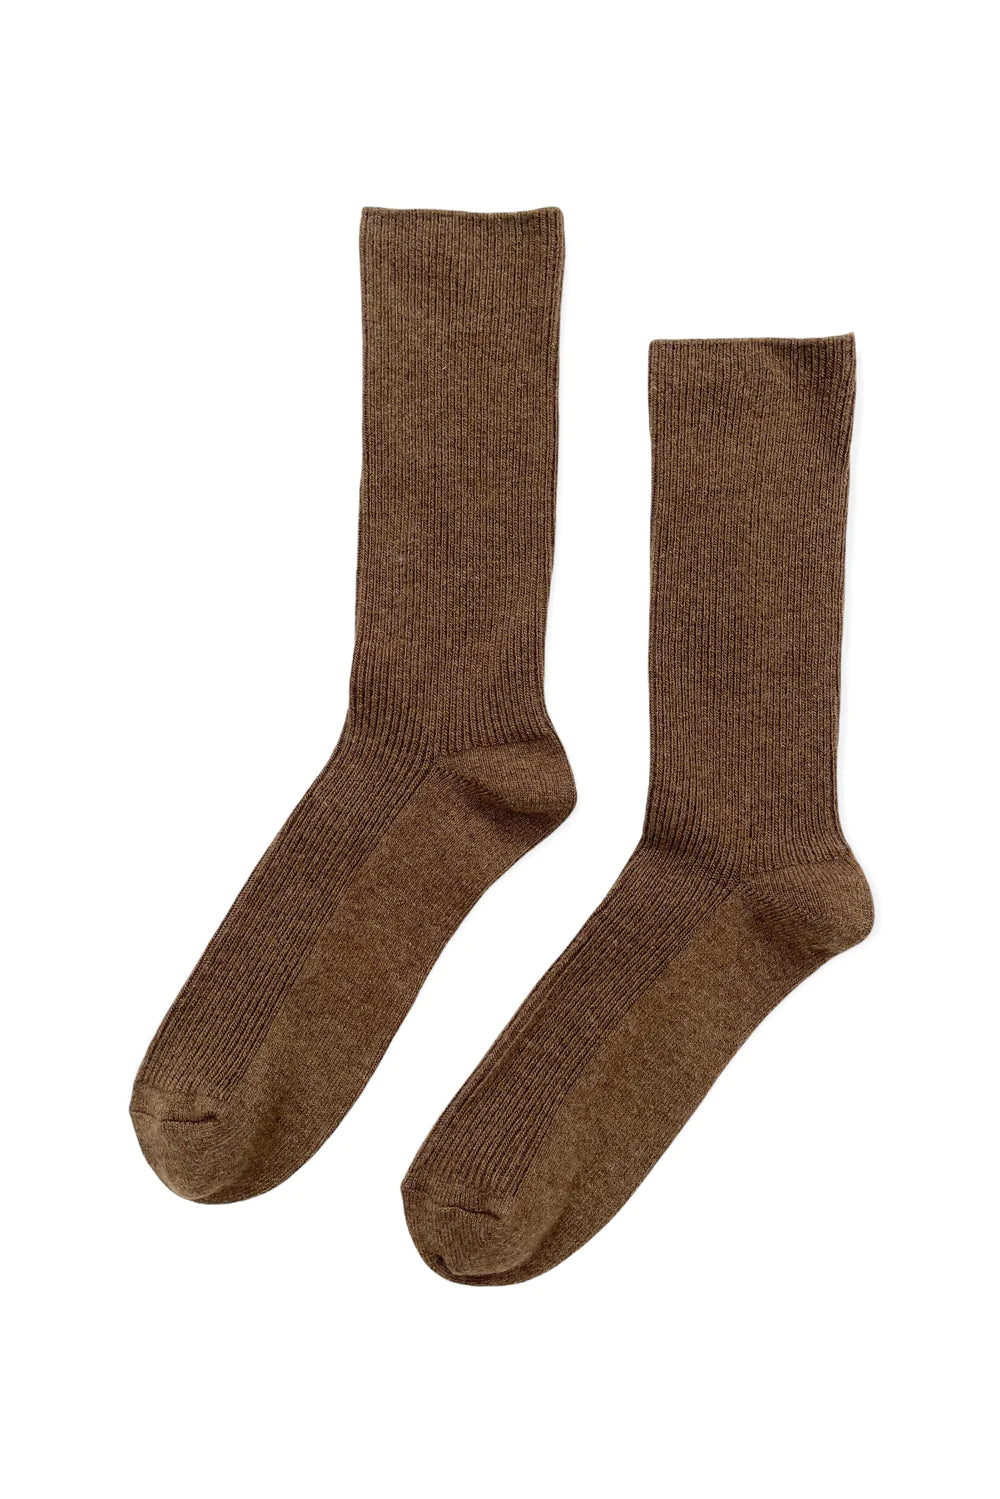 GRANDPA socks ⎜Otter